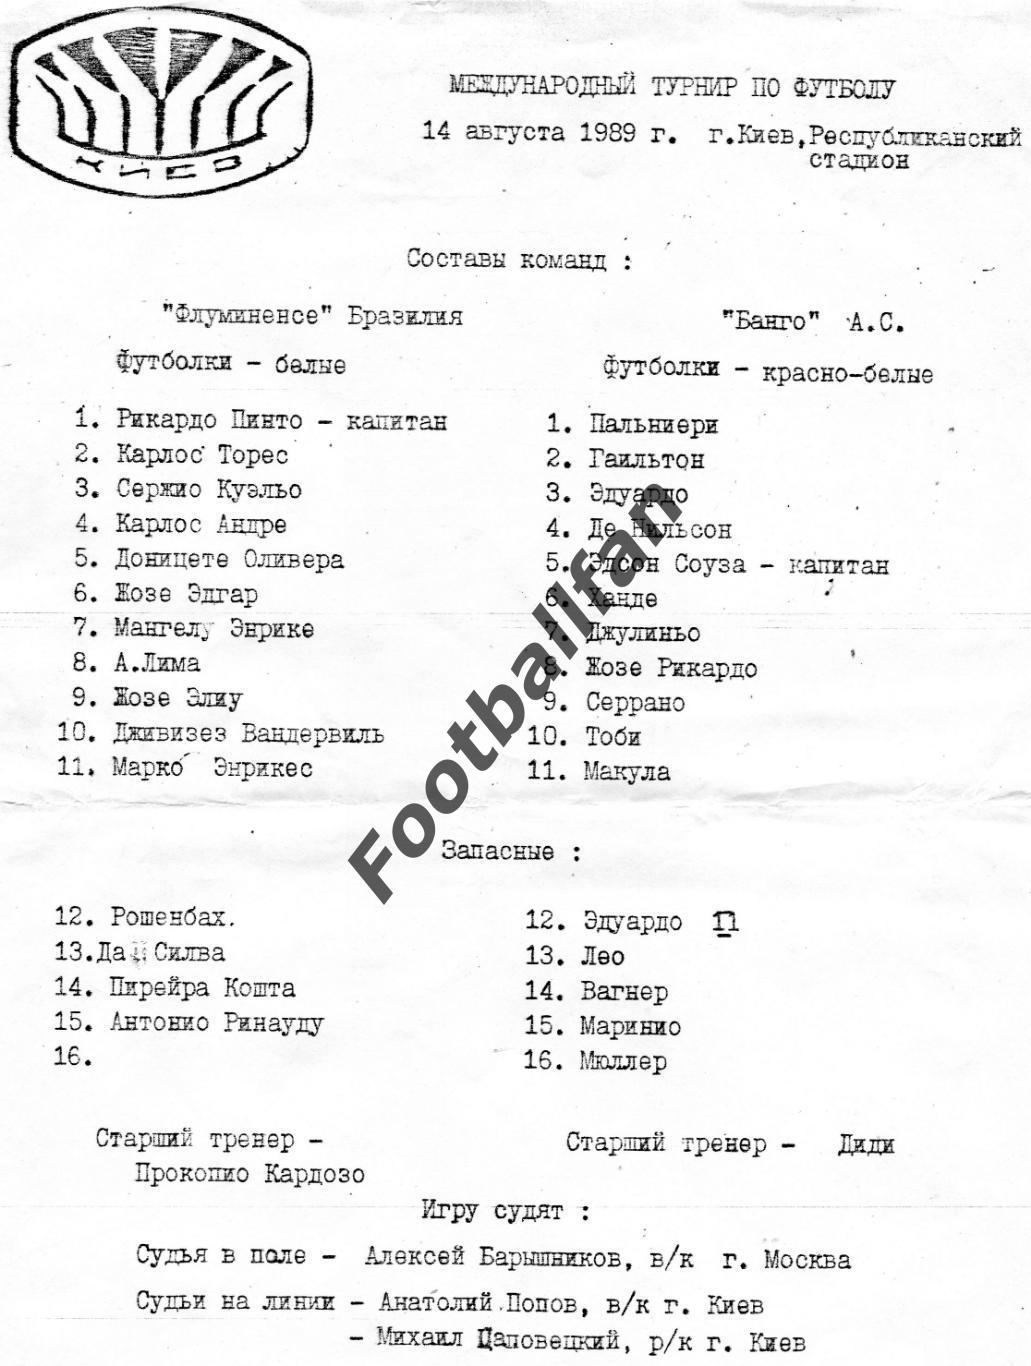 Флуминенсе Бразилия - Банга Бразилия 14.08.1989 матч в Киеве